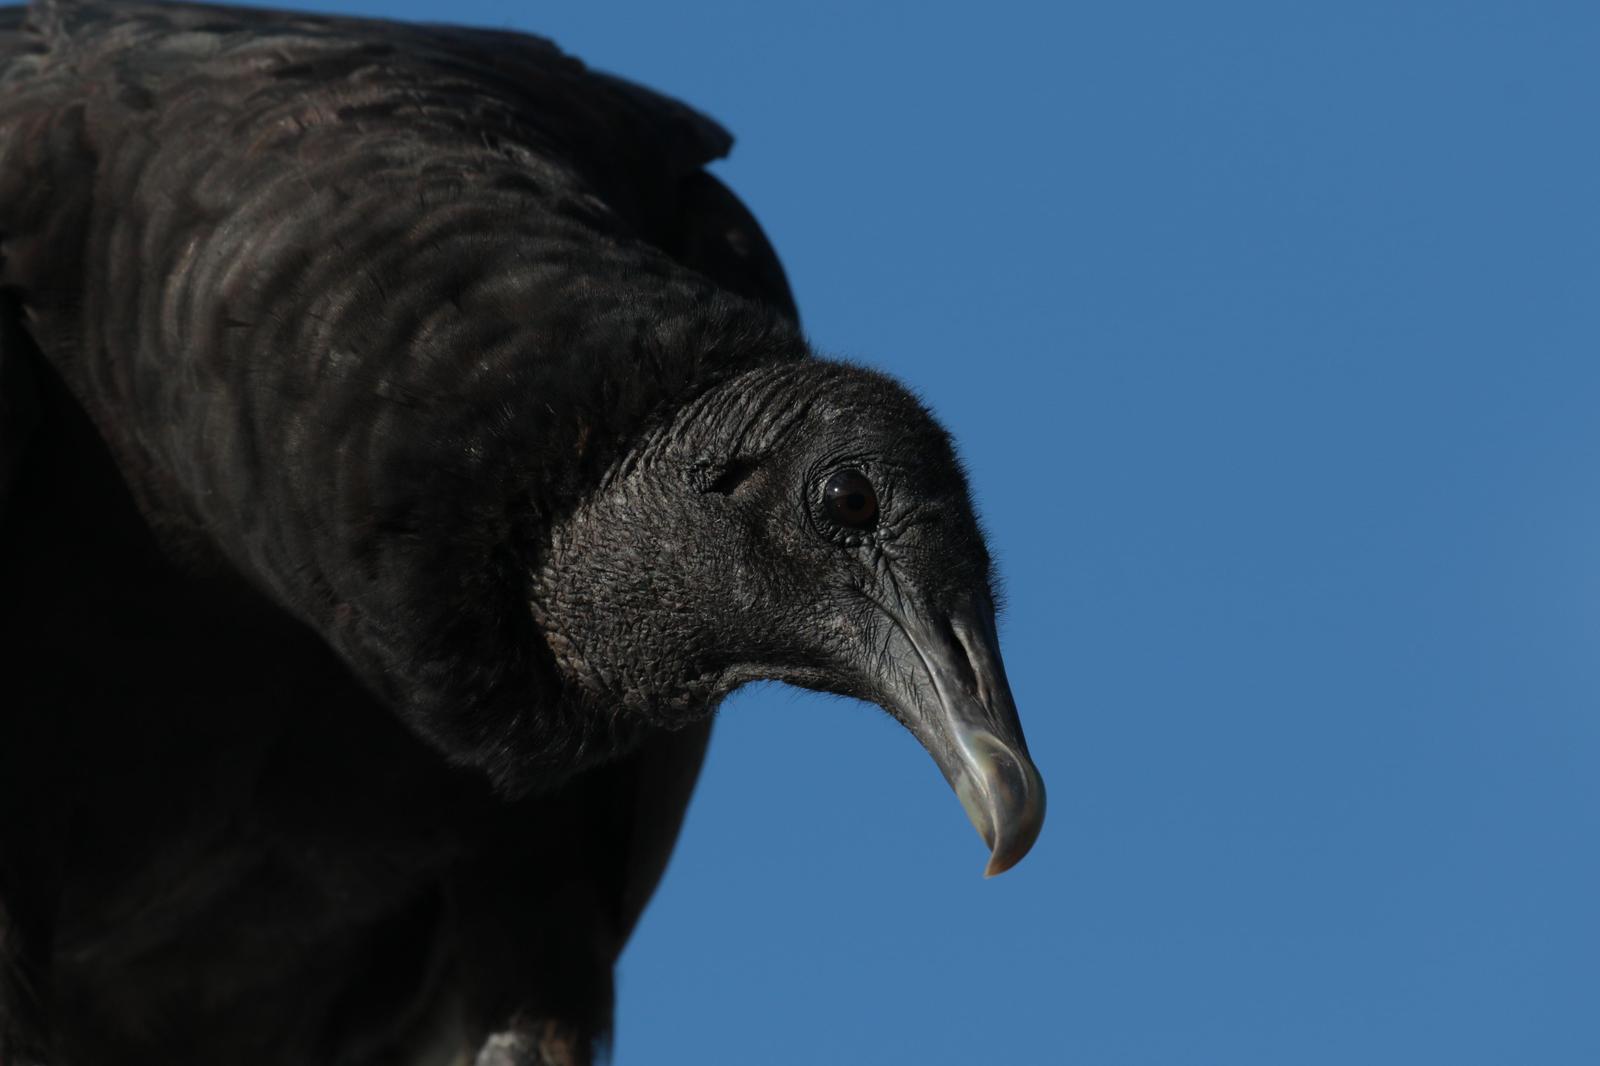 Black Vulture Photo by Karin Kirchhoff